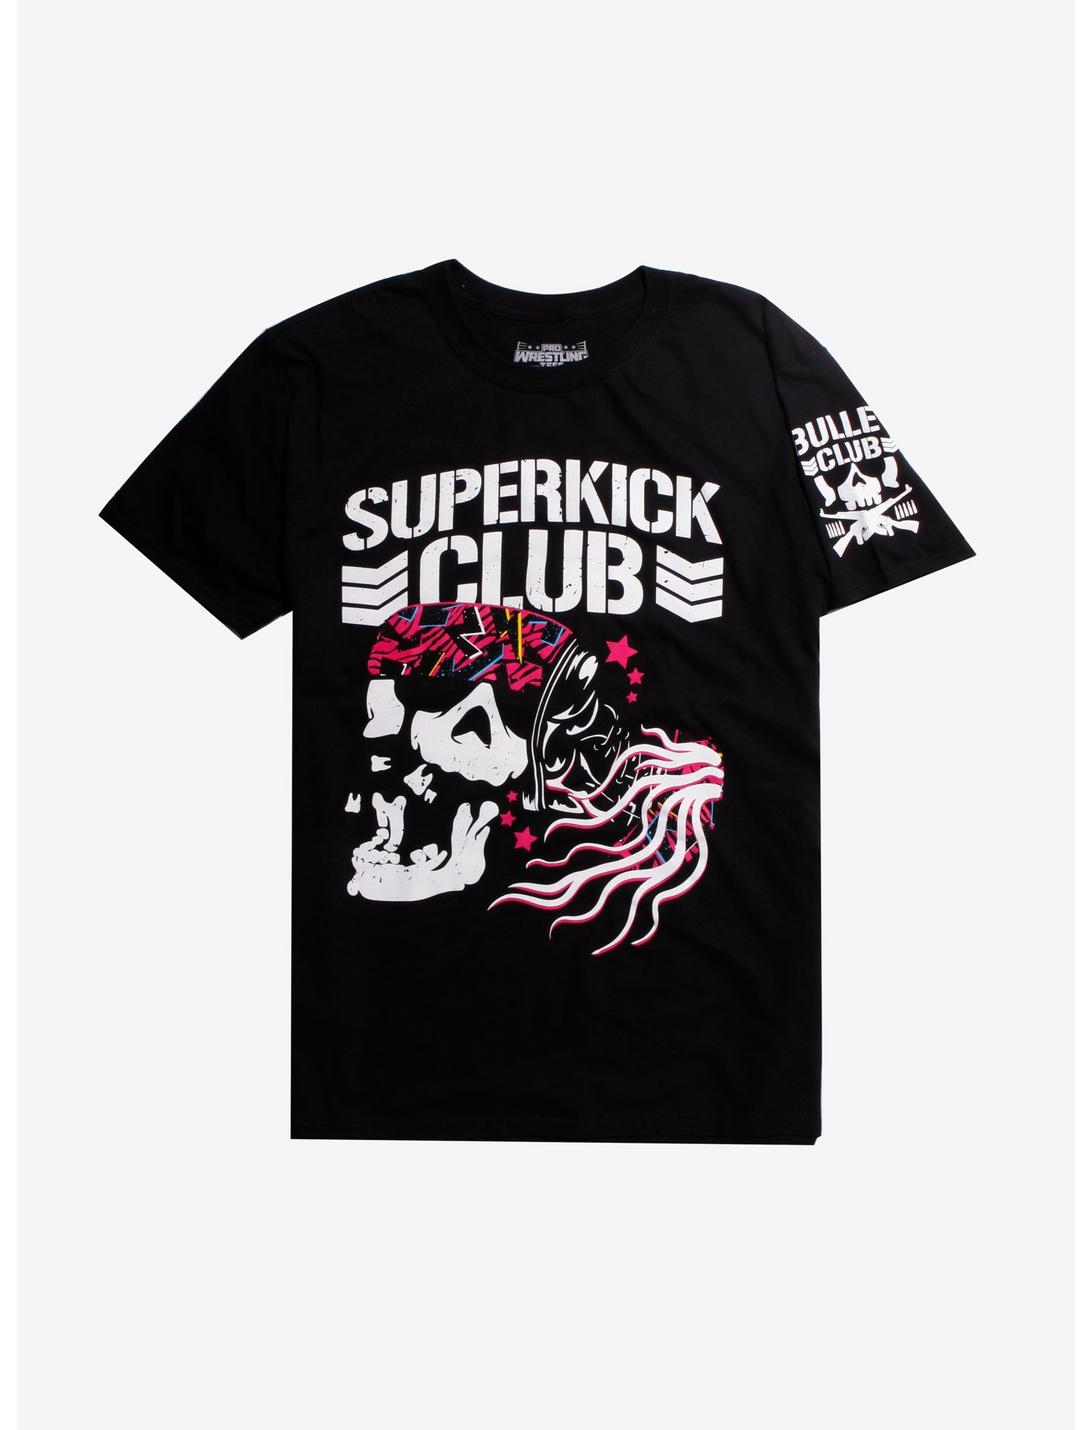 New Japan Pro-Wrestling The Young Bucks Superkick Club T-Shirt Hot Topic Exclusive, BLACK, hi-res